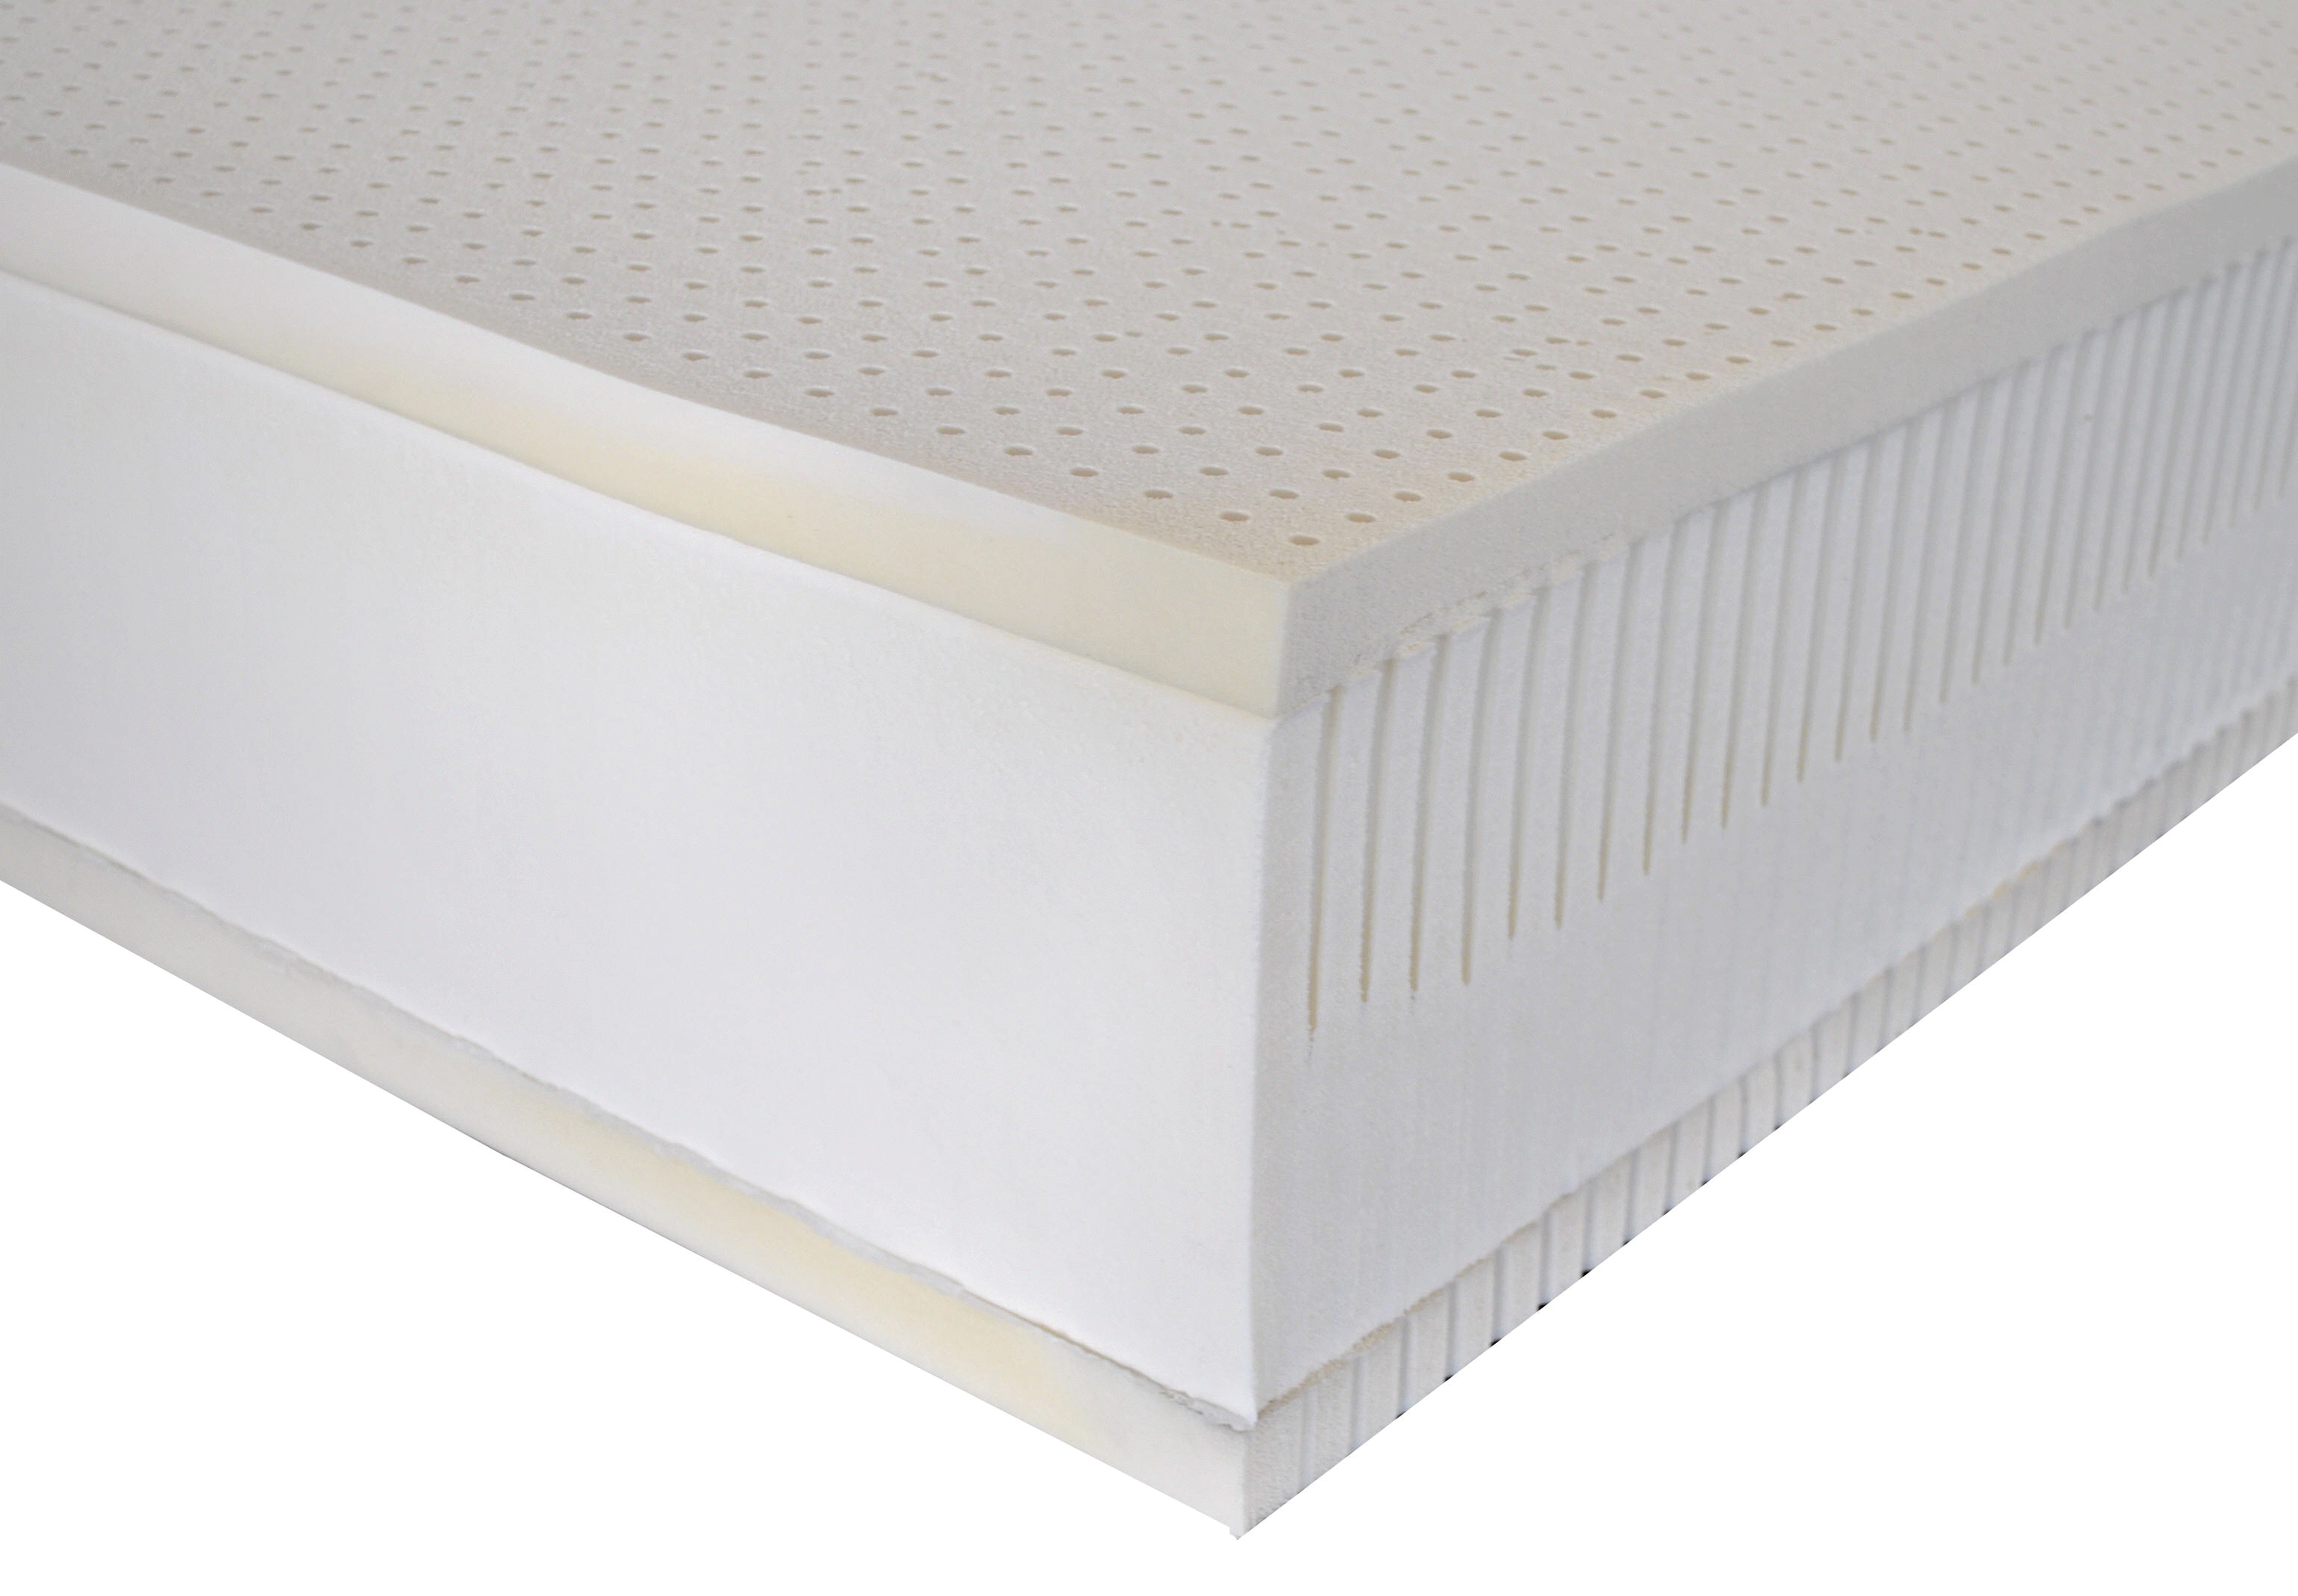 9" NAO Natural And Organic high profile mattress by LATEXPEDIC